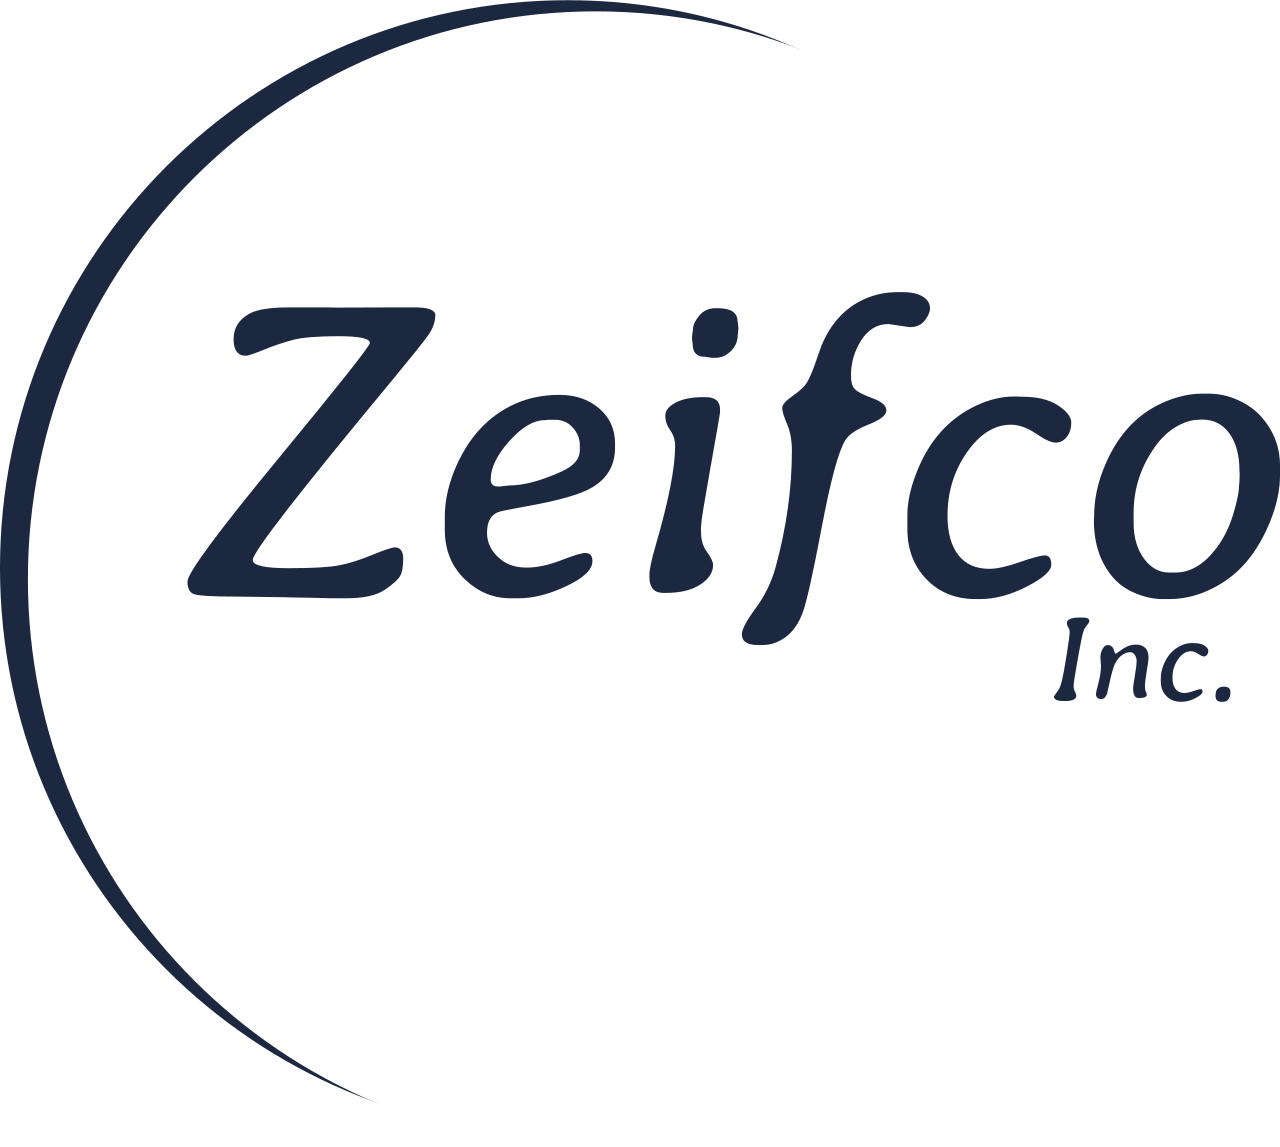 Zeifco Inc. Energy on blockchain.'s web page